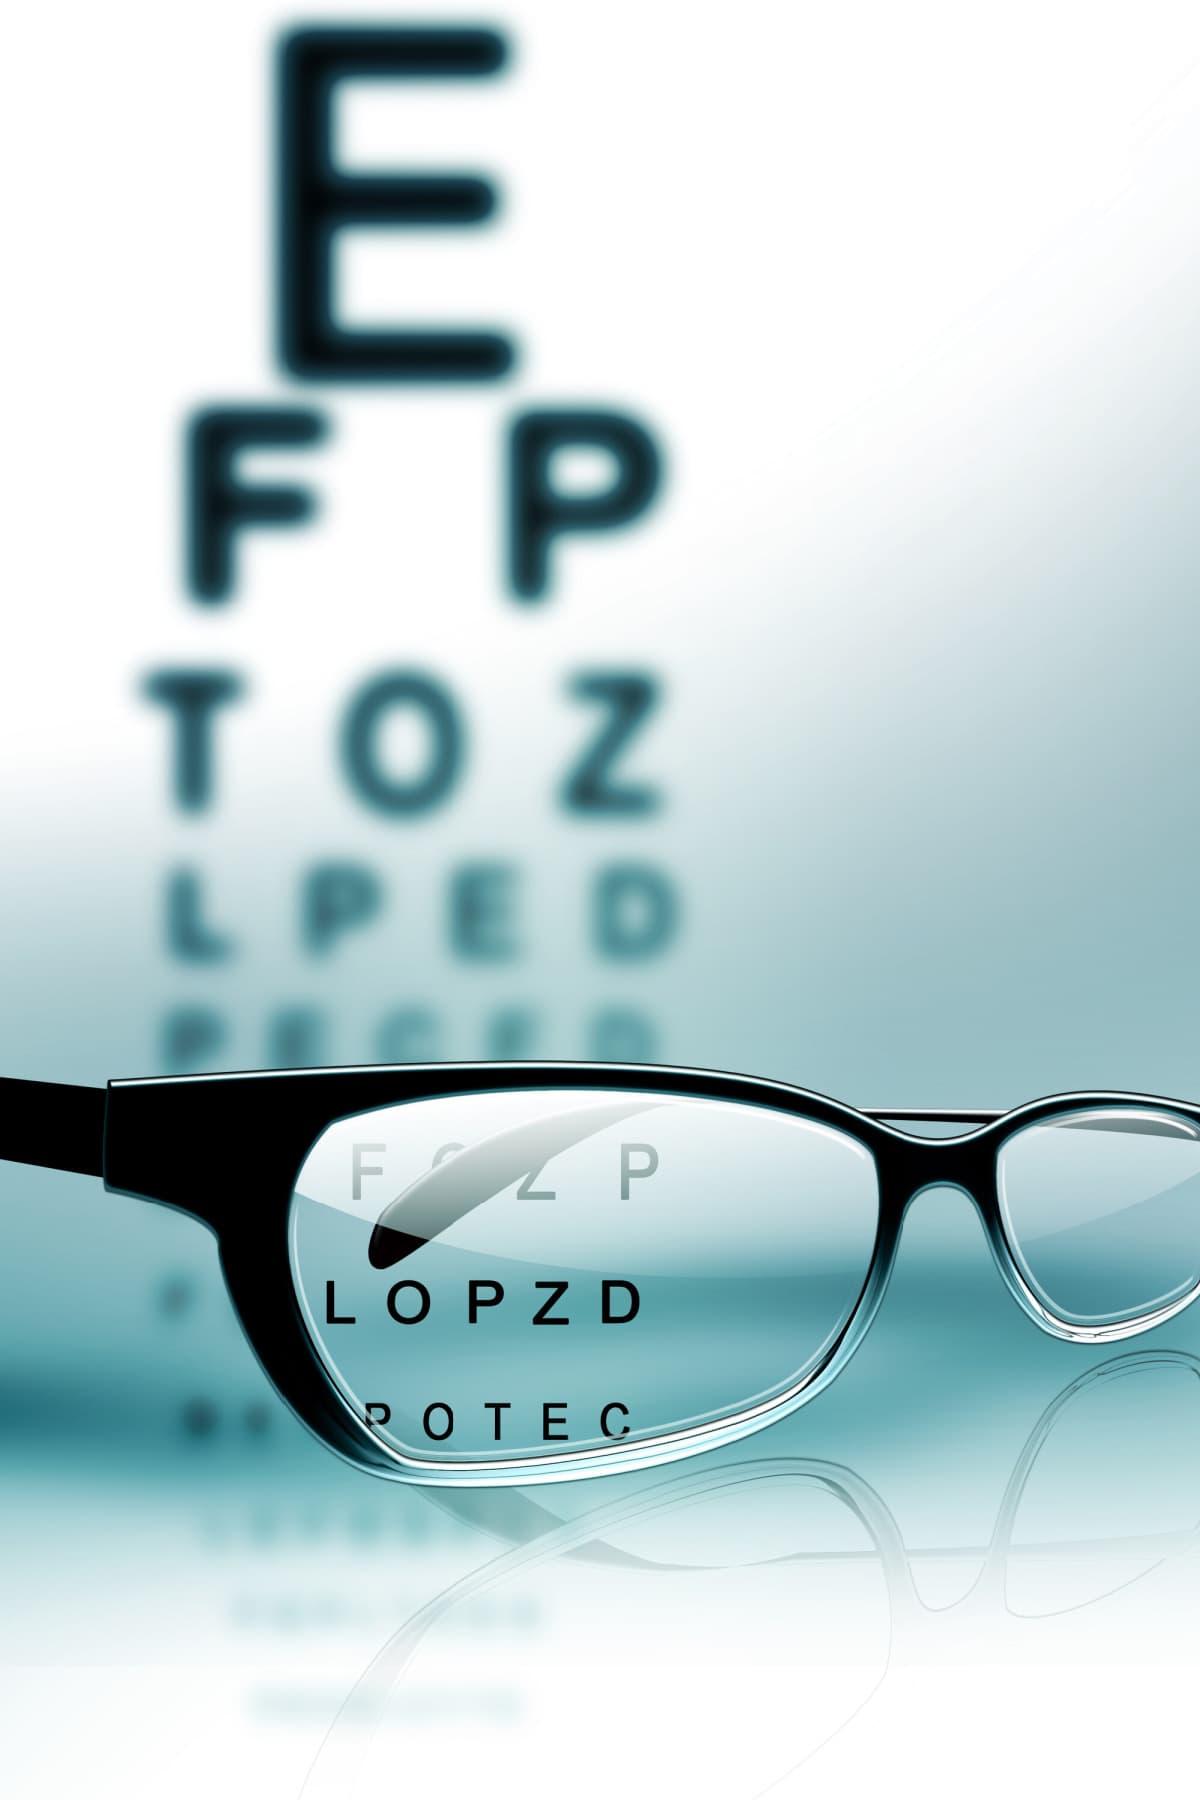 5 Worst Foods for Eye Health